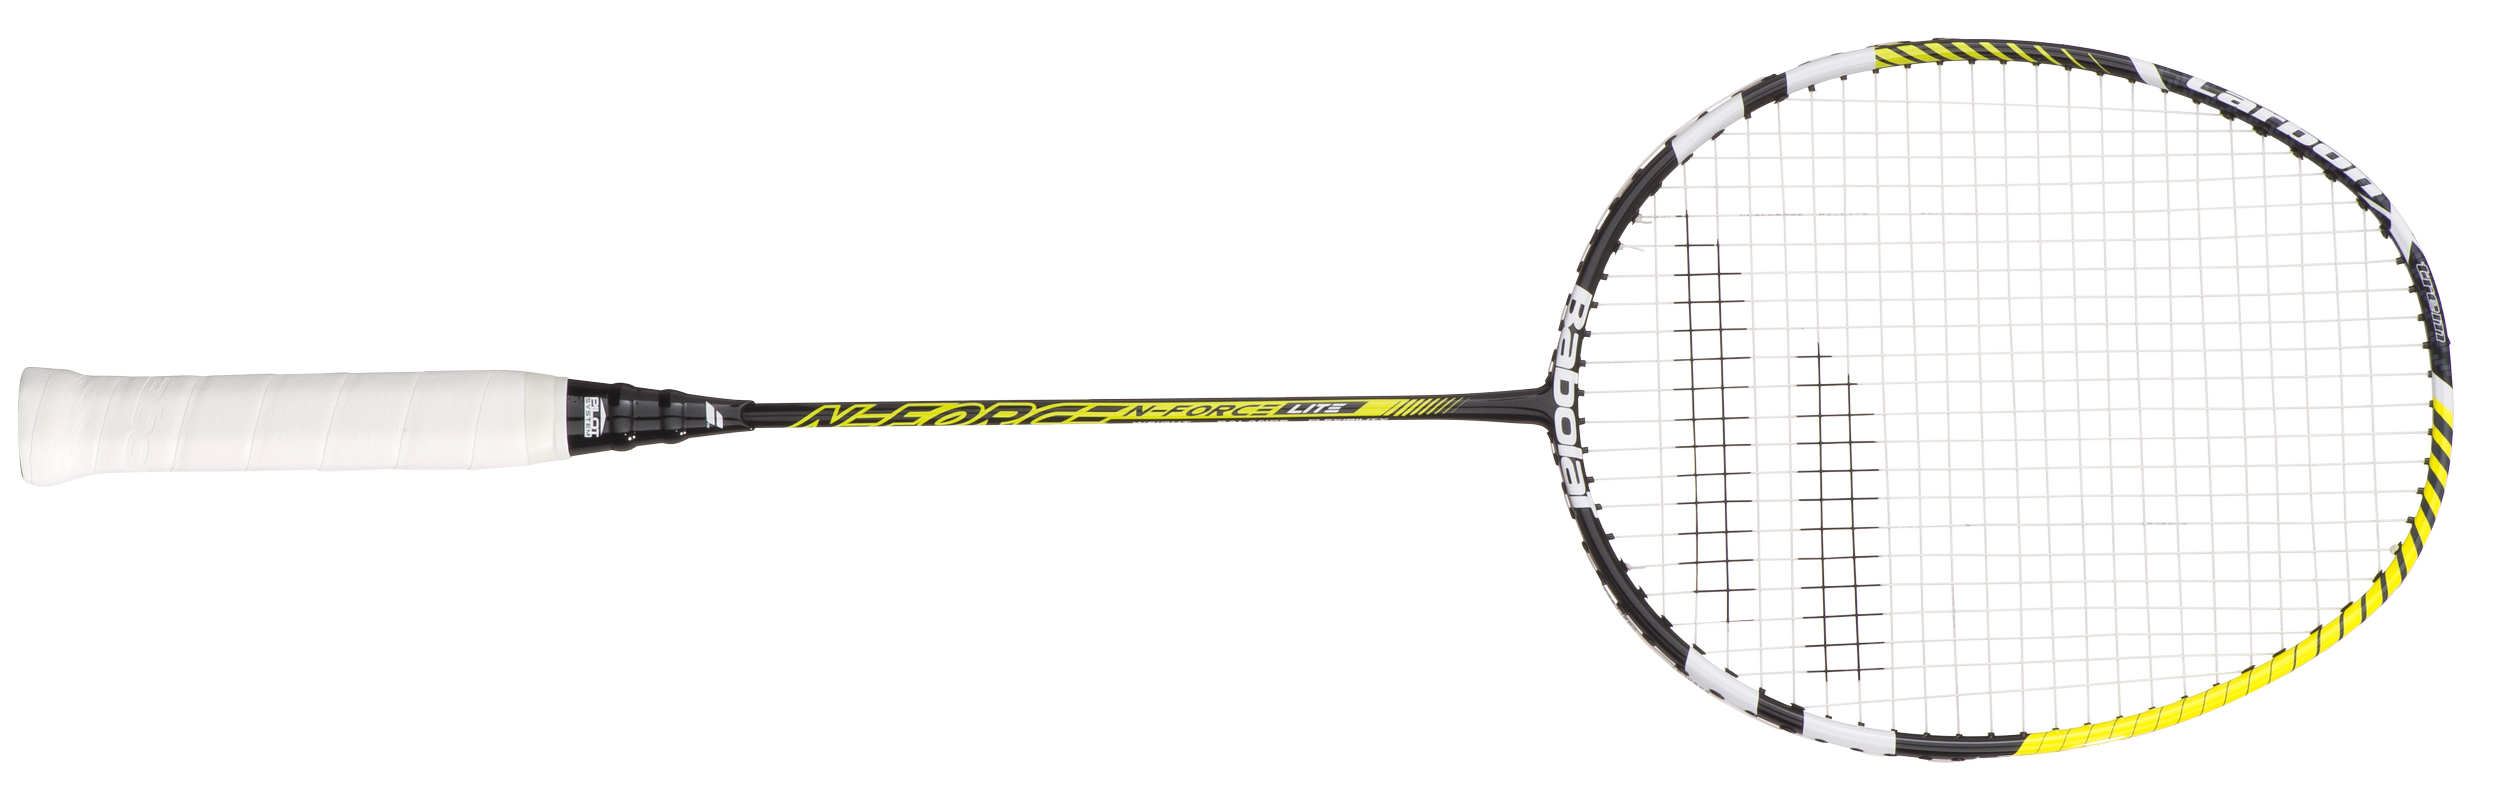 Badmintonracket Transparante achtergrond PNG